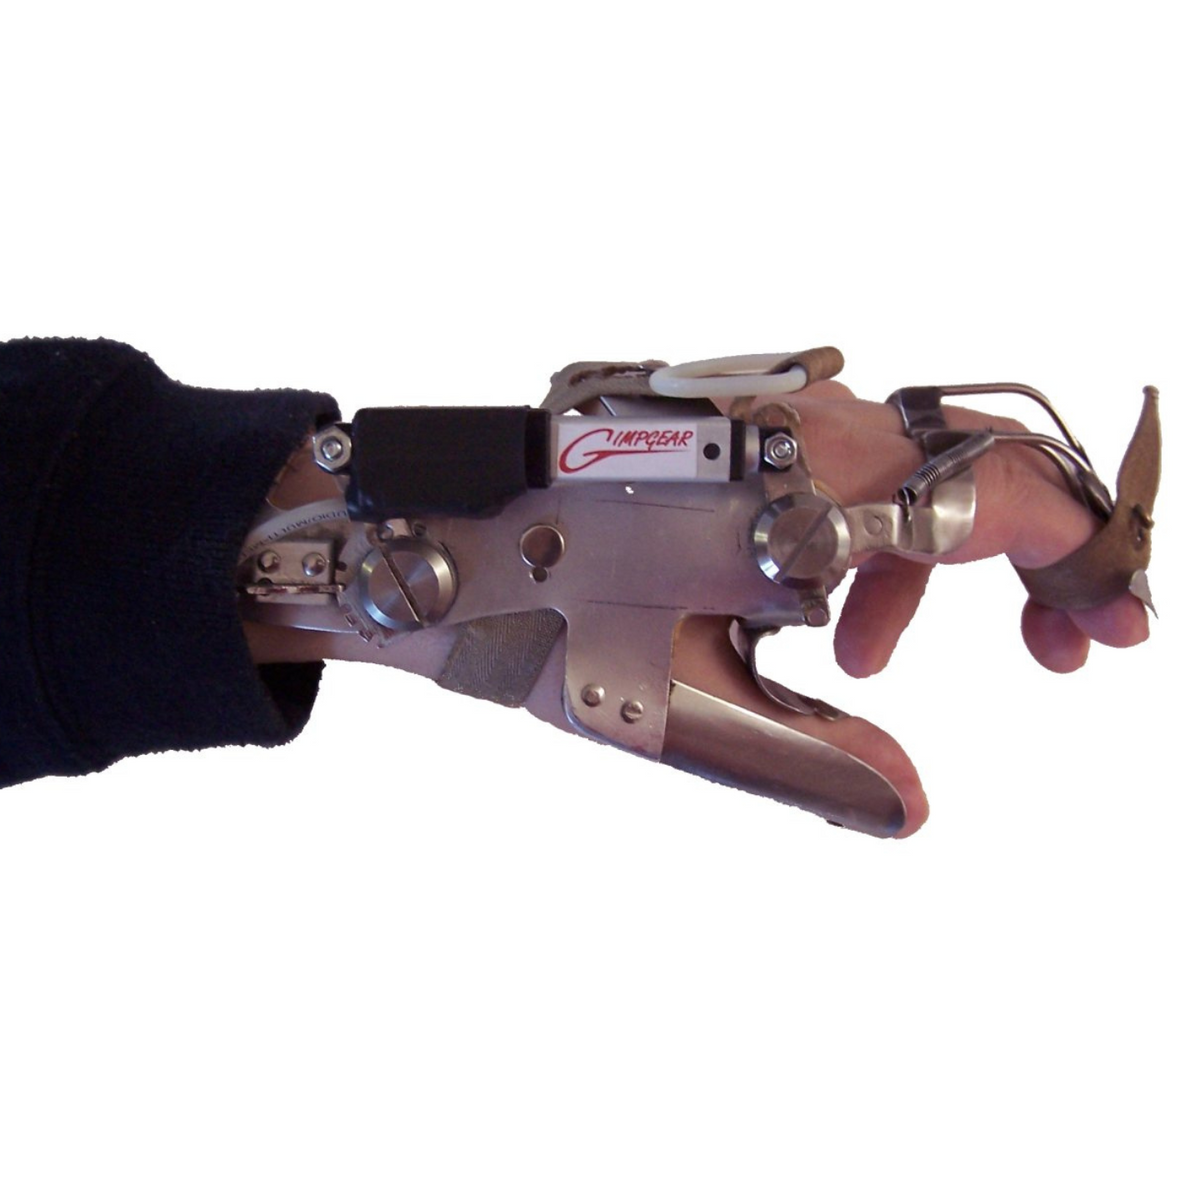 PowerGrip Orthosis - Powered Grasp Exoskeleton Glove